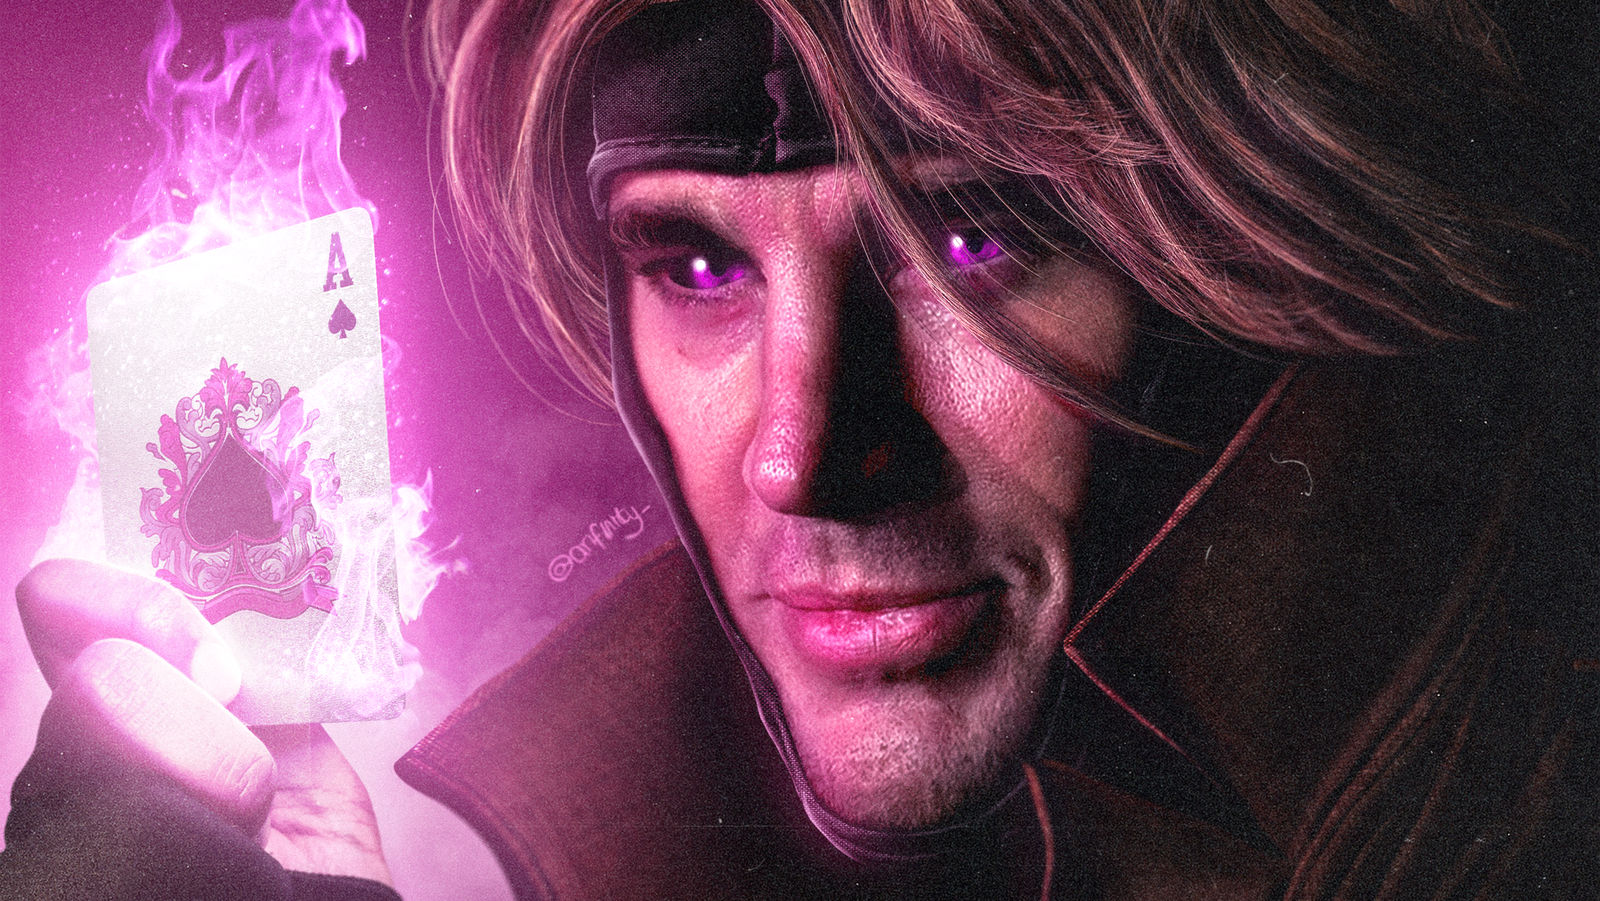 Channing Tatum as Gambit in Deadpool 3 by diamonddead-Art on DeviantArt